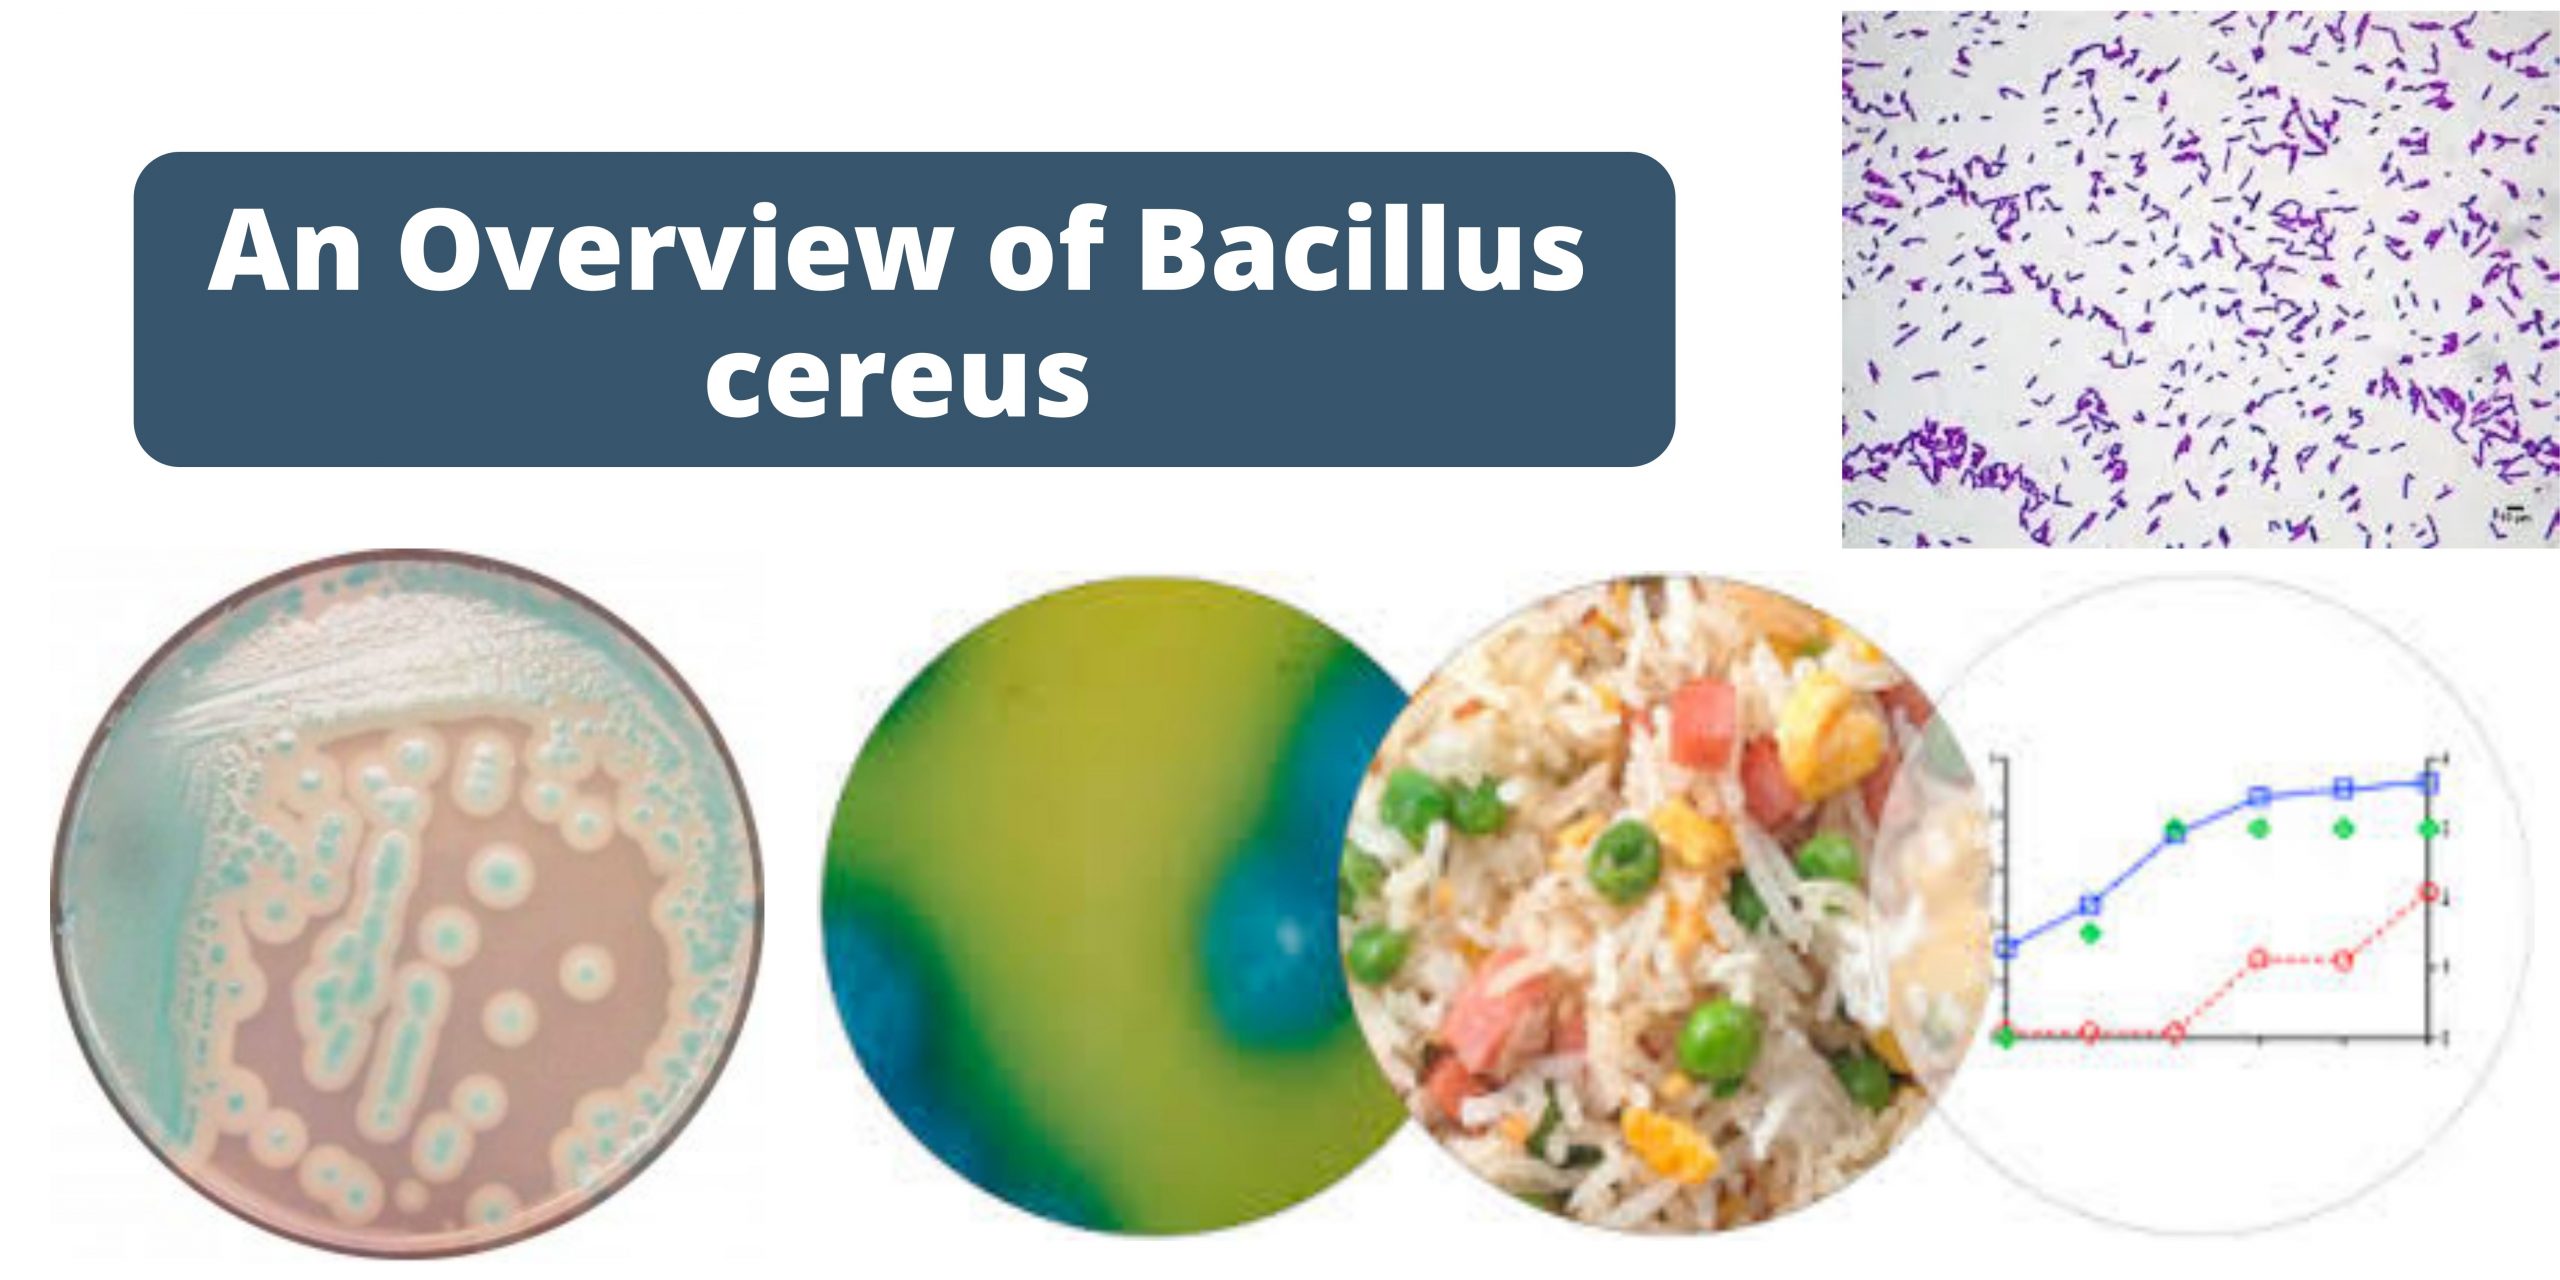 An Overview of Bacillus cereus